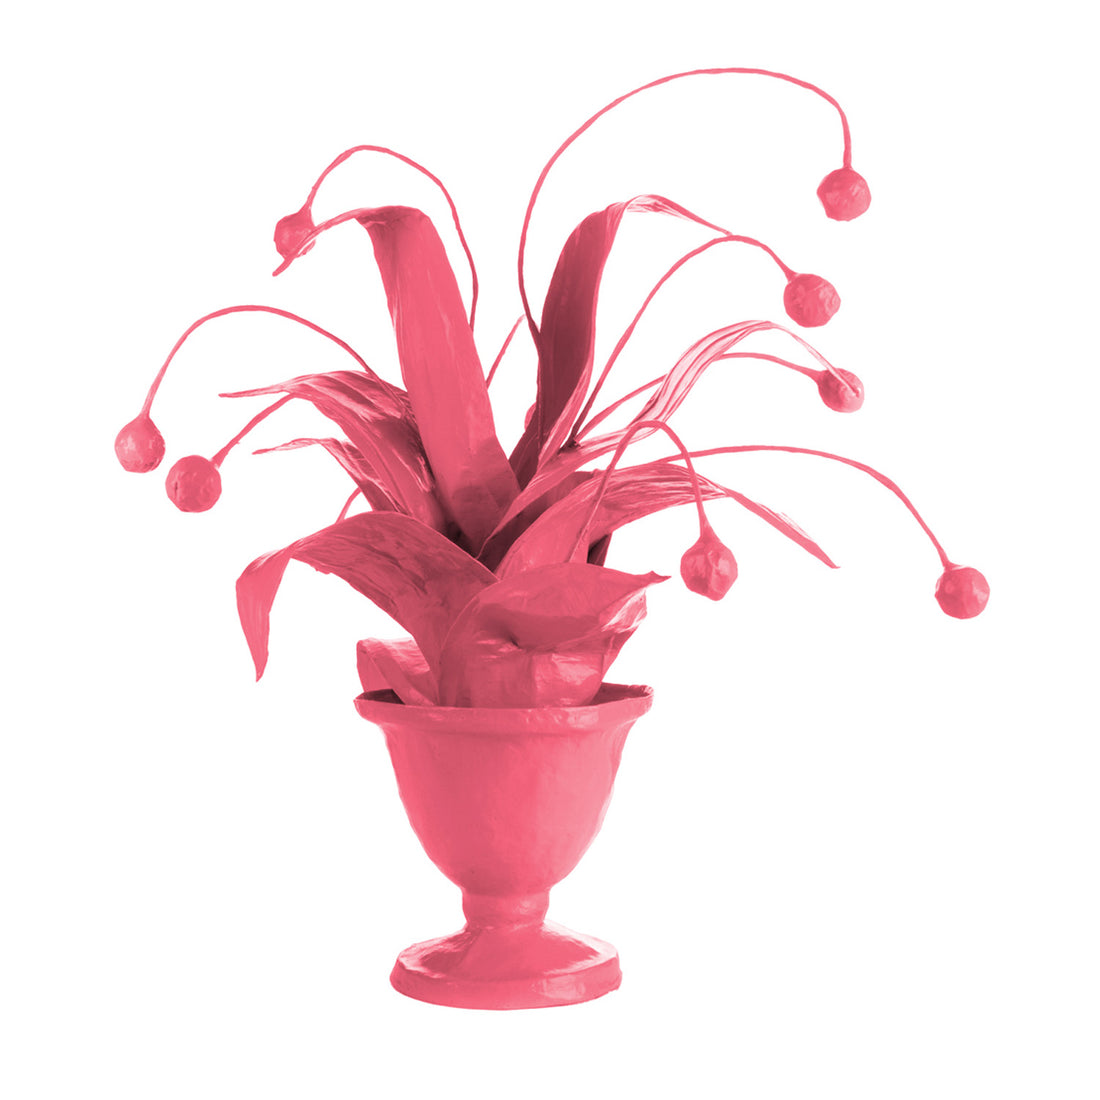 Crunchberry plant in pink papier mache